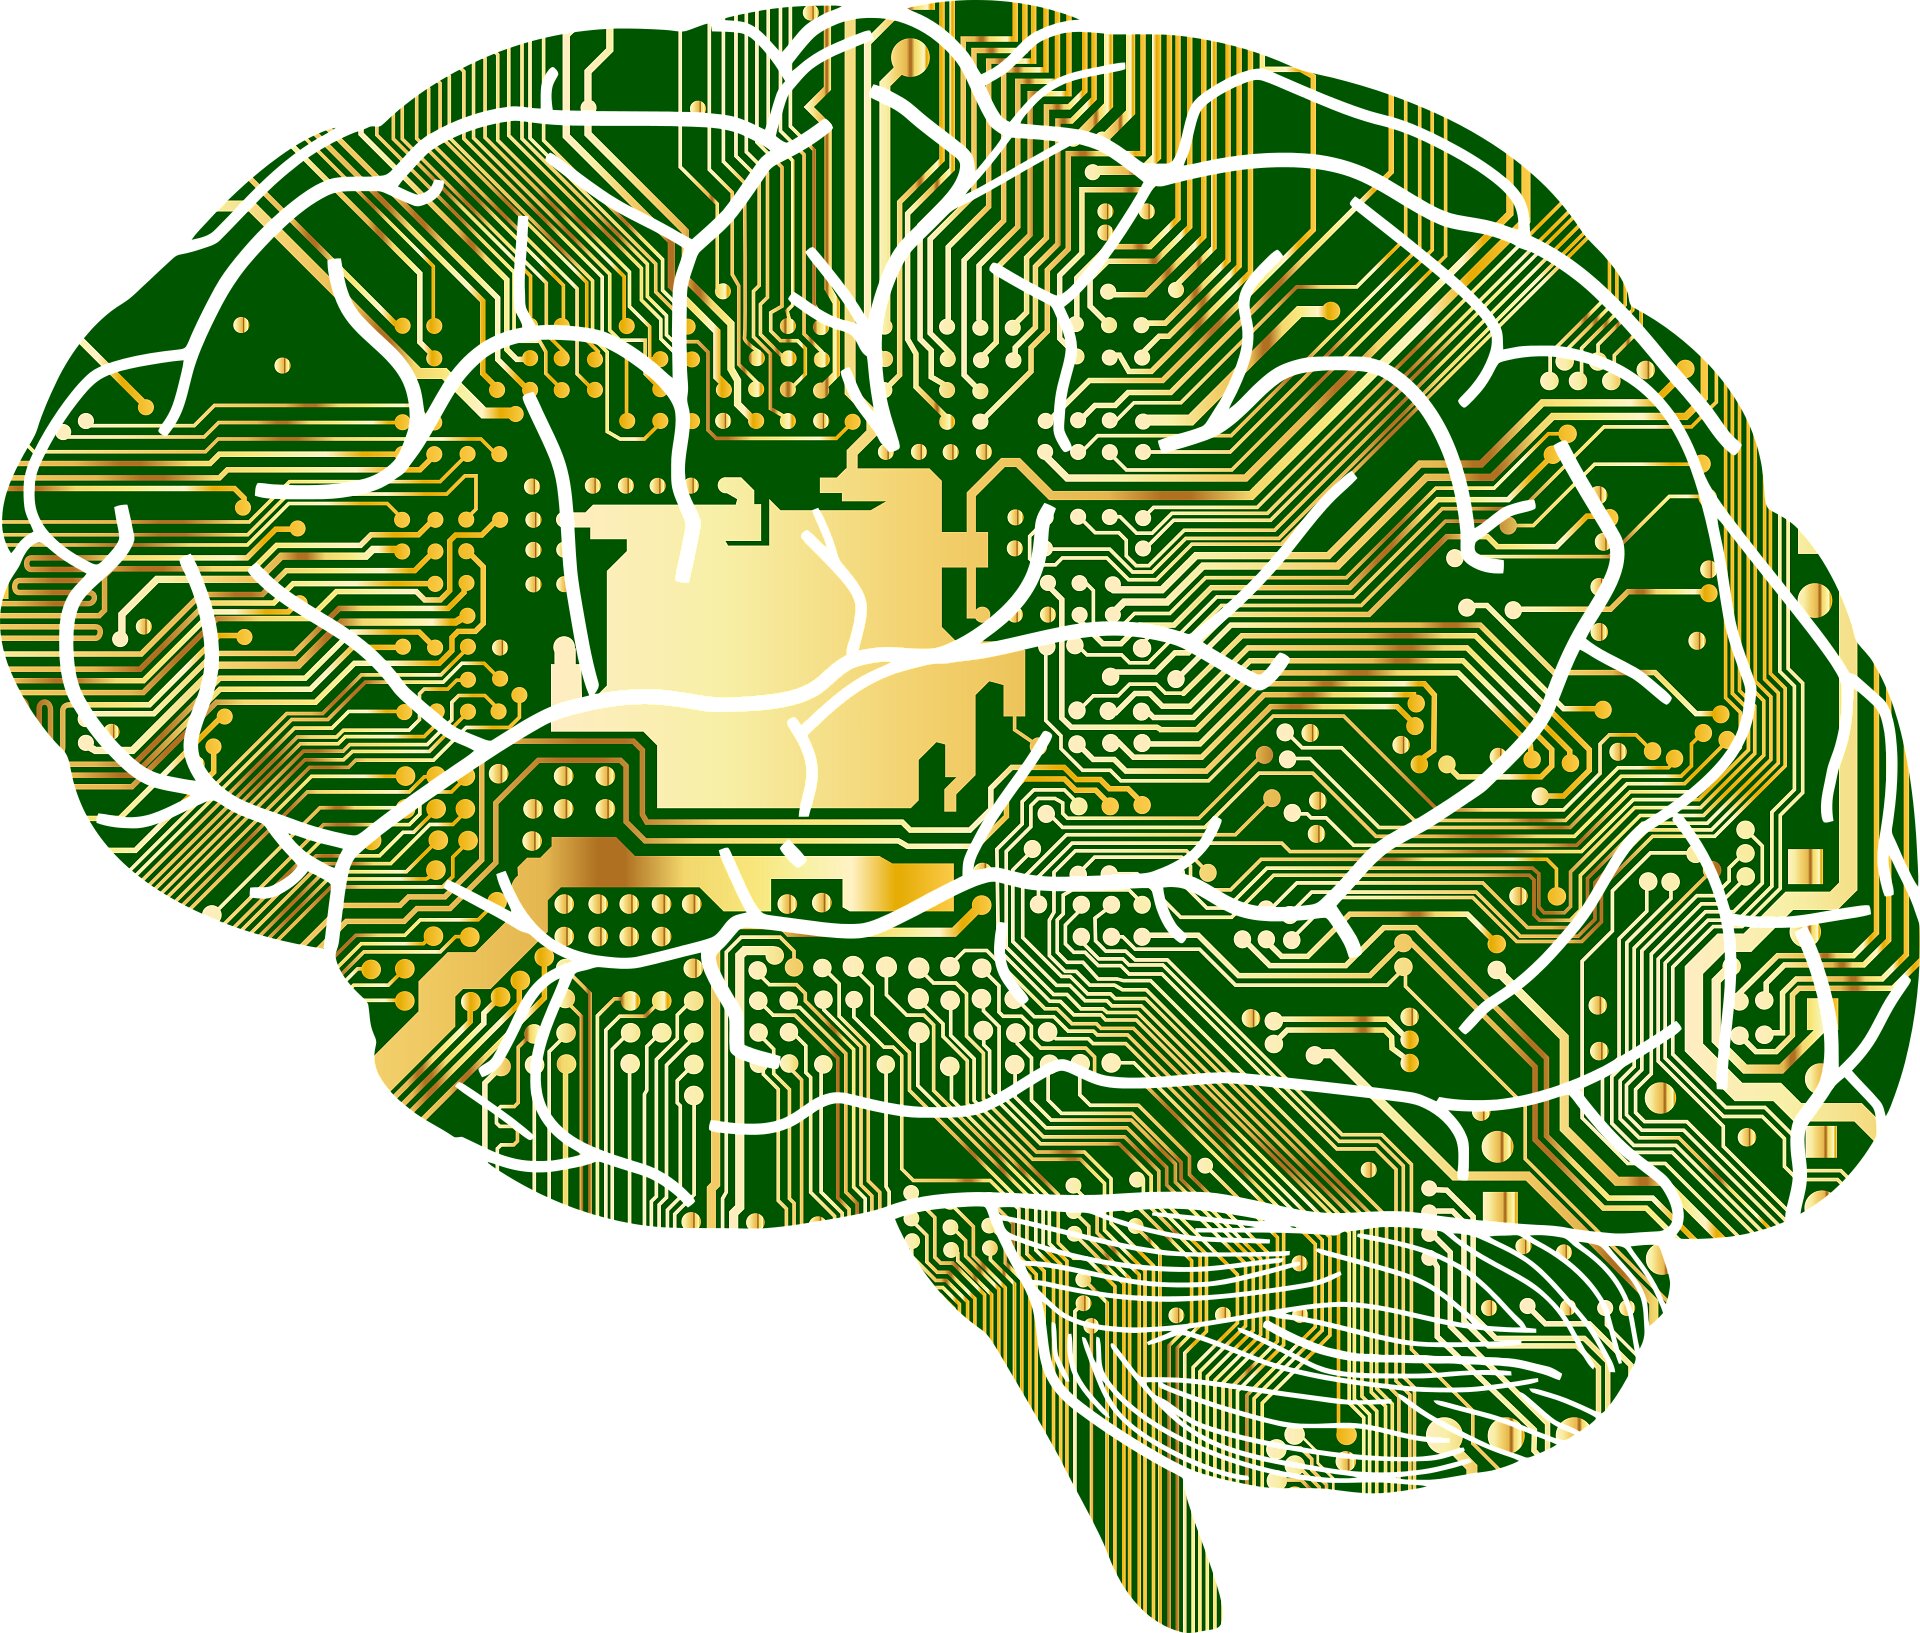 Researchers develop hybrid human-machine framework for building smarter AI